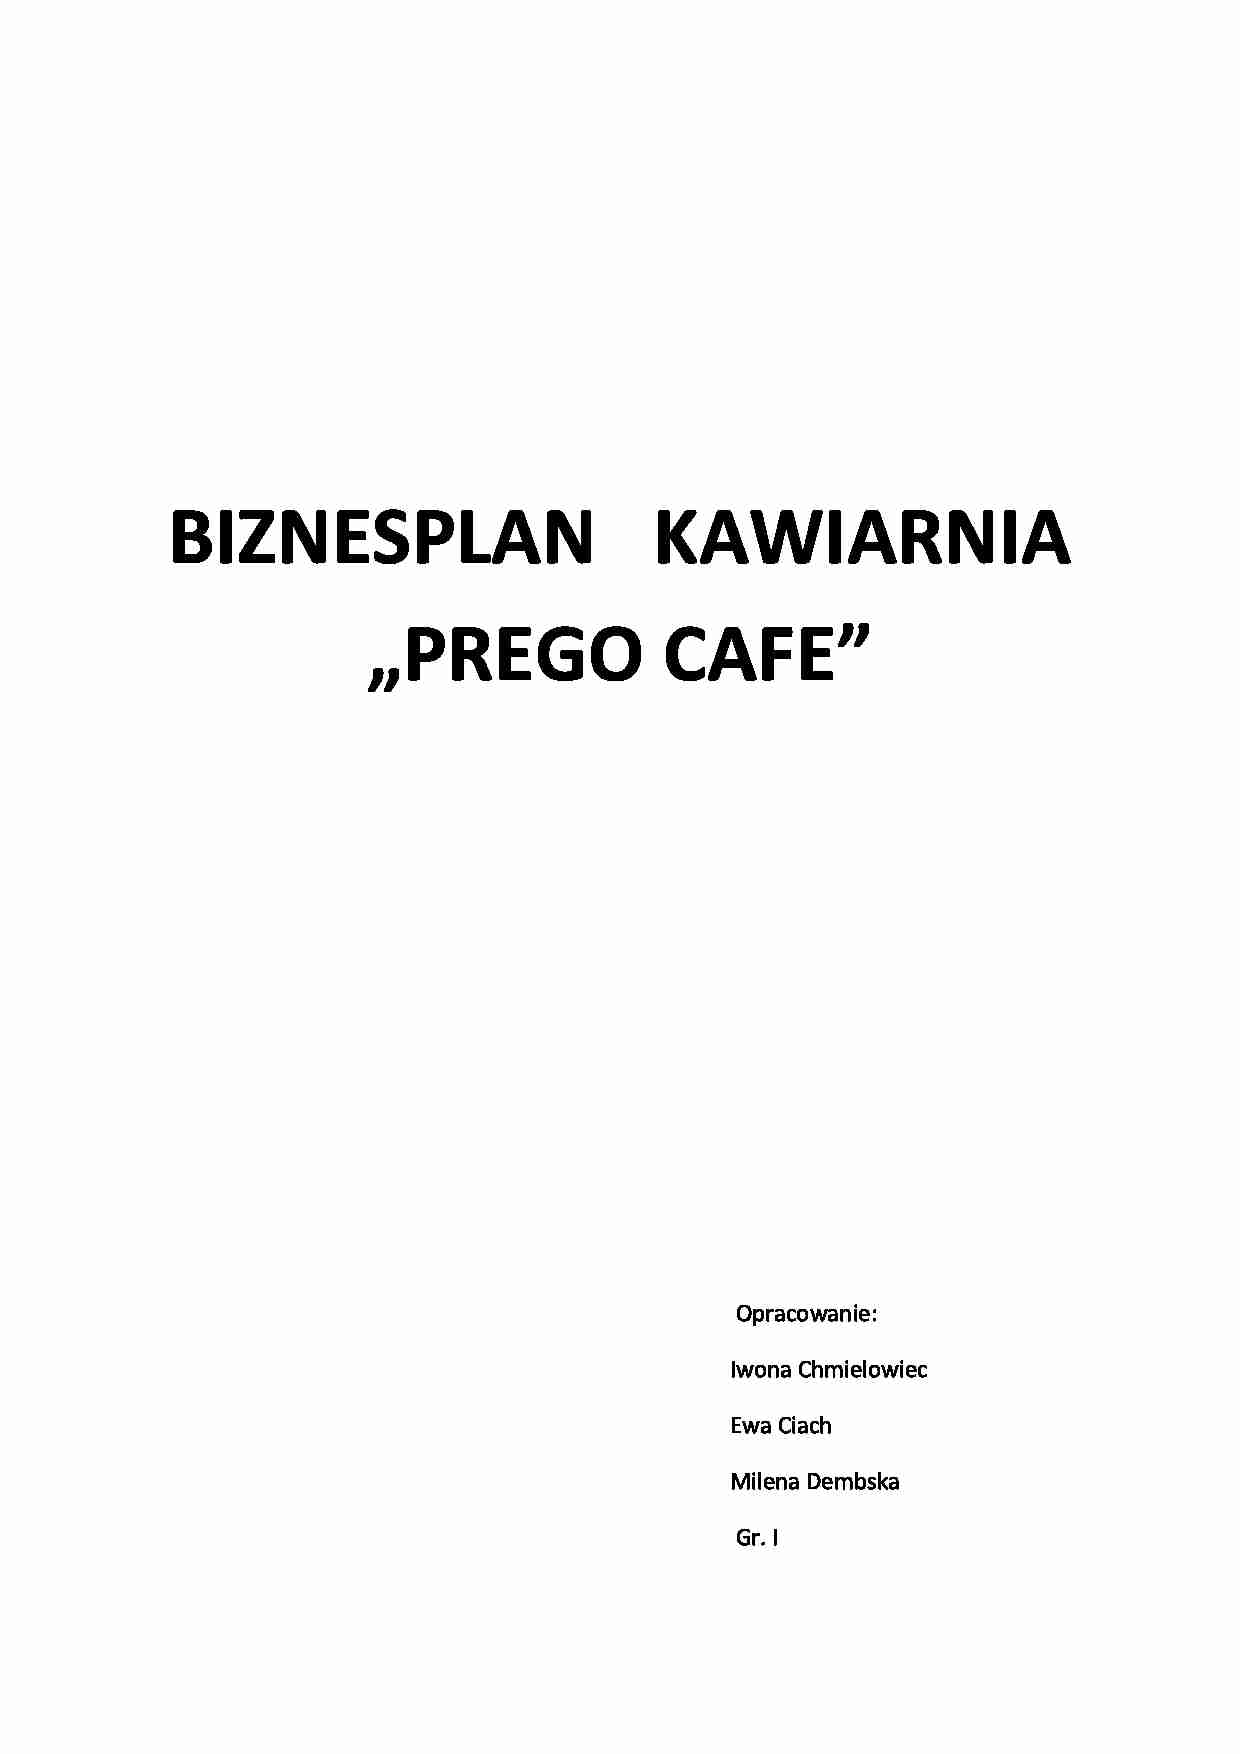 Biznesplan kawiarni - strona 1